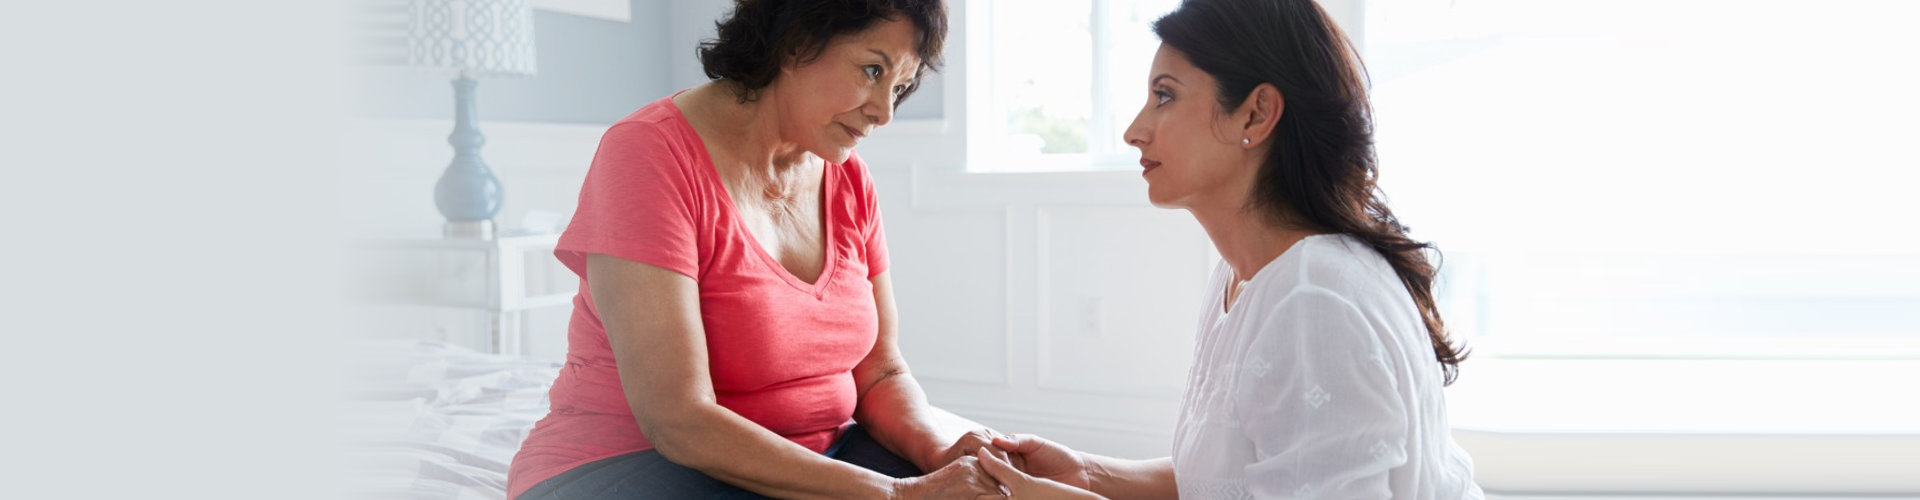 caregiver comforting a senior woman